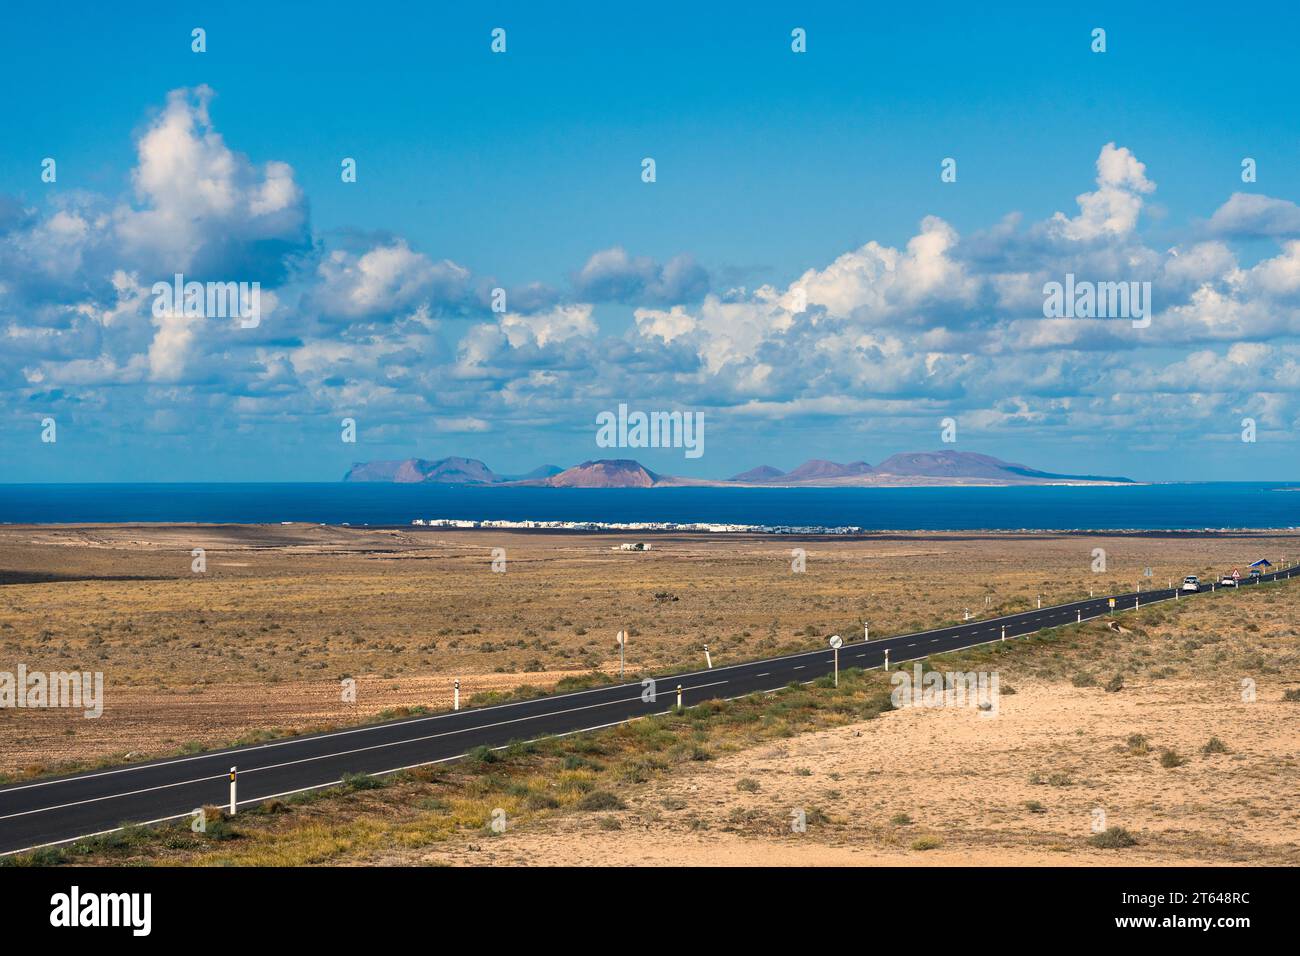 Spain, Canary Islands, La Graciosa: panoramic view of the Graciosa island and Caleta de Famara from Lanzarote island Stock Photo